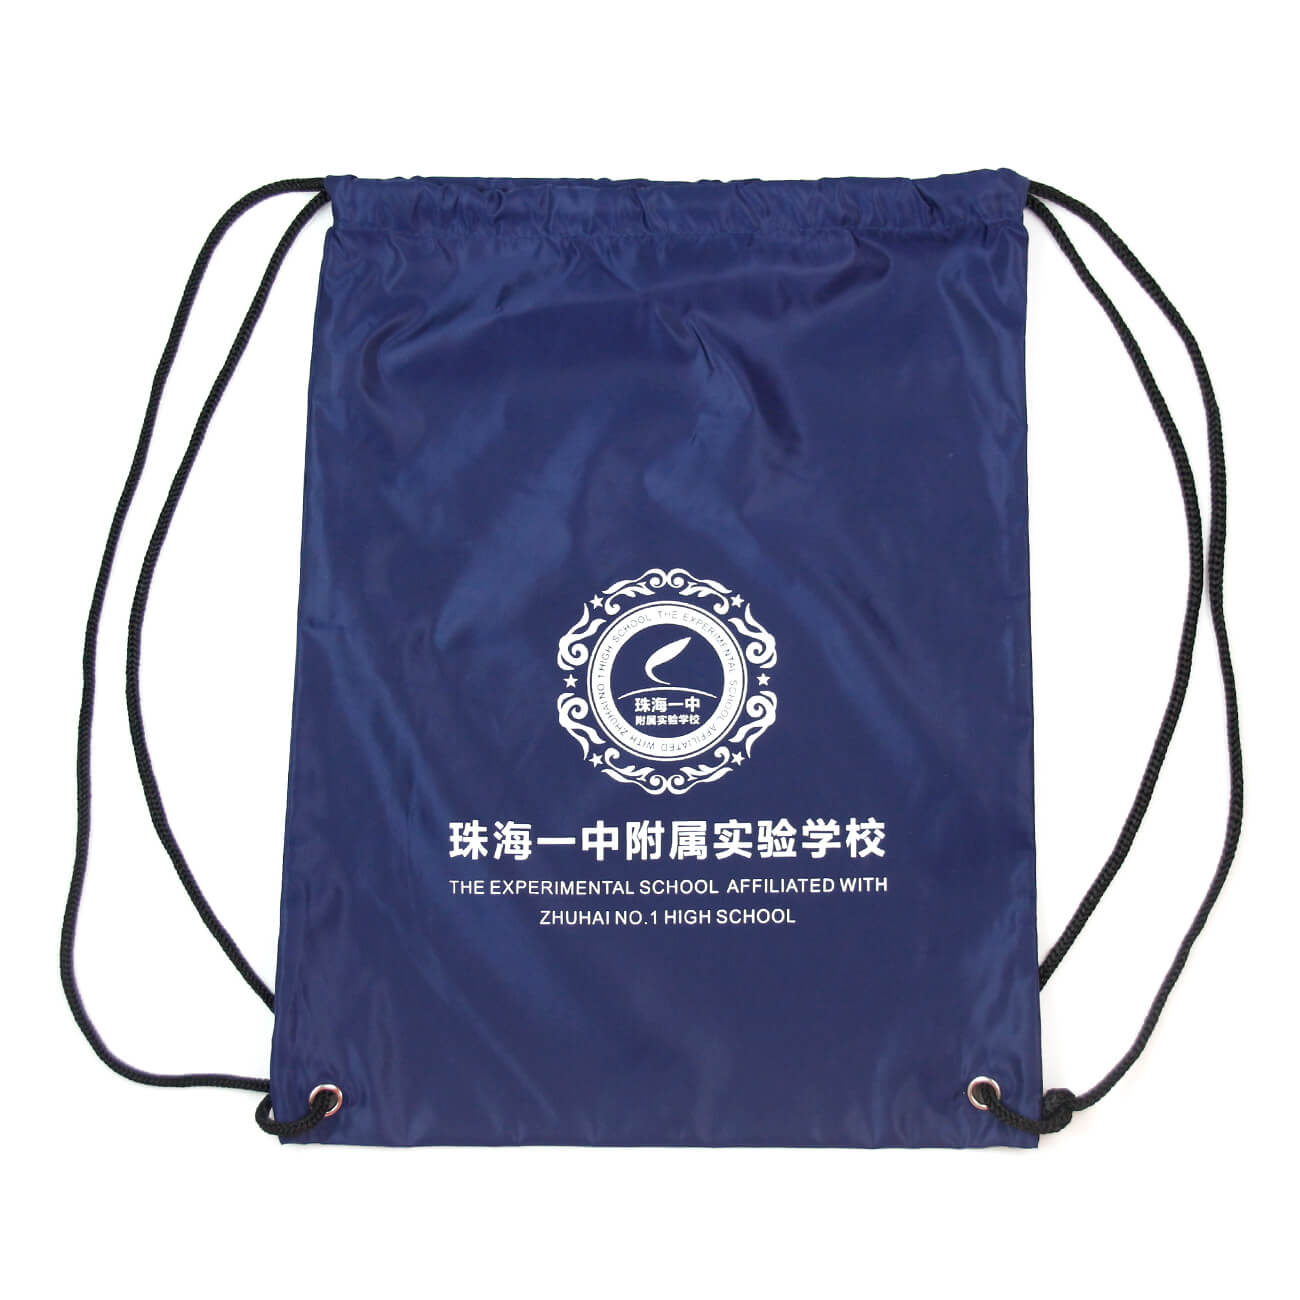 Cinch Drawstring Gym Beach Backpack Bag